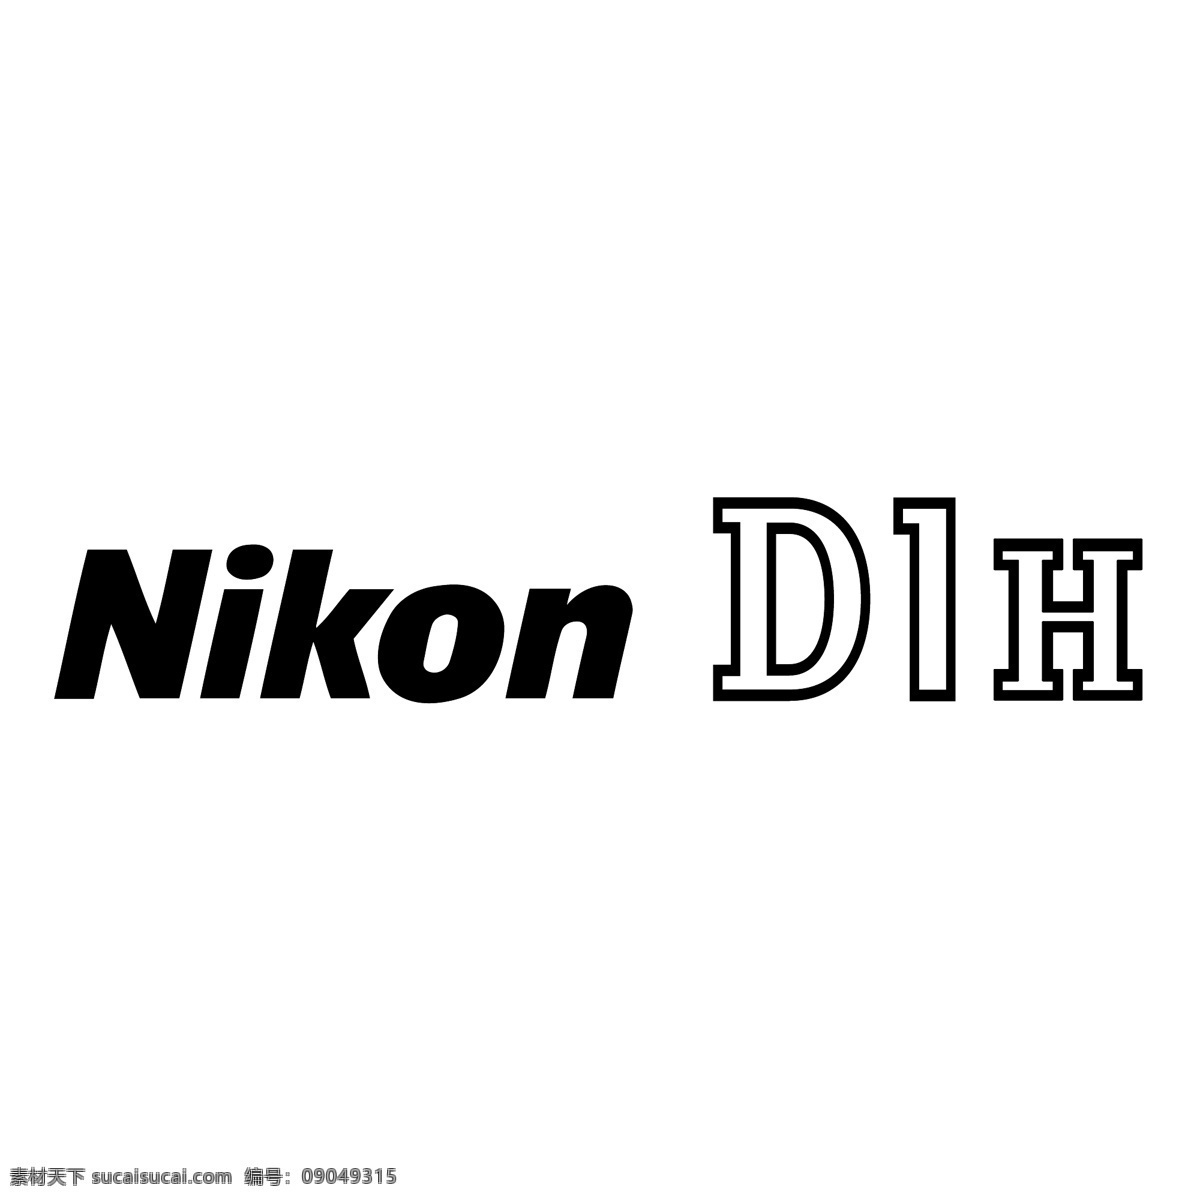 d1h尼康 尼康 d1h 艺术 载体 尼康设计 向量 标志尼康 矢量 标志 自由 logo 文件 矢量图 建筑家居